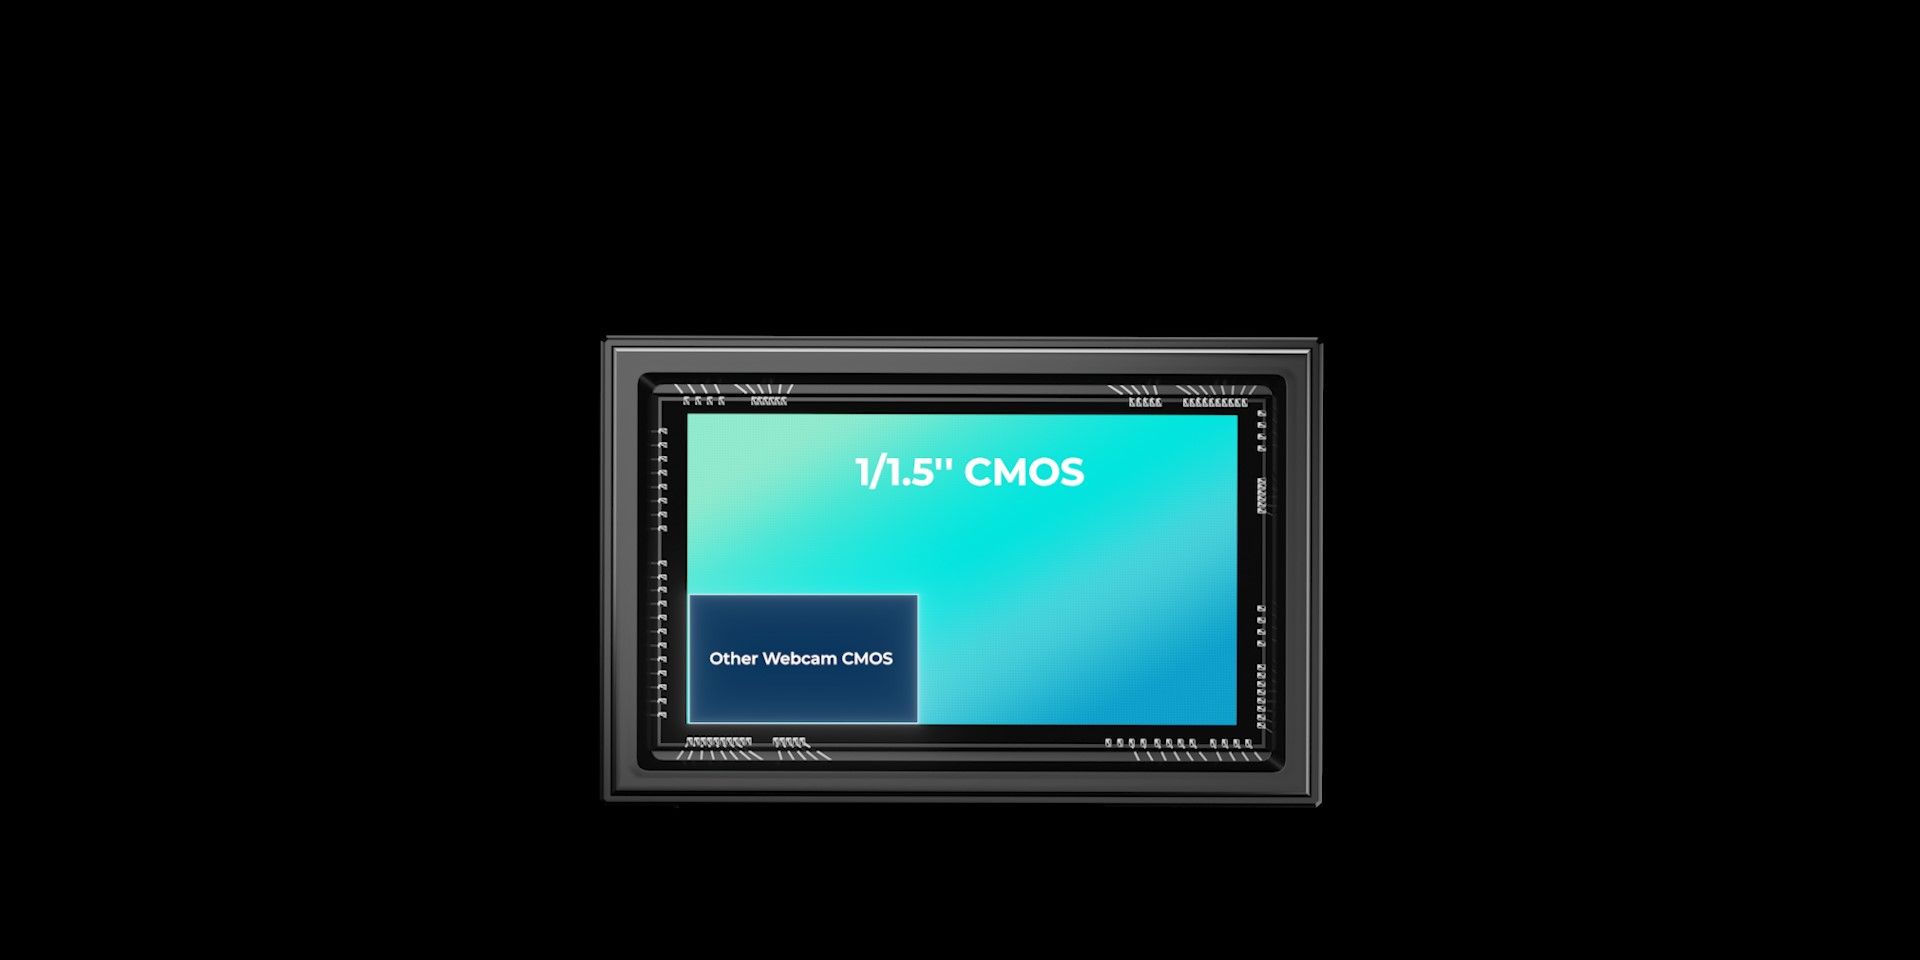 OBSBOT Tiny 2 Webcam 4K Voice Control PTZ, AI Tracking Multi-Mode & Auto  Focus, Web Camera with 1/1.5 Sensor, Gesture Control, 60 FPS, HDR Light